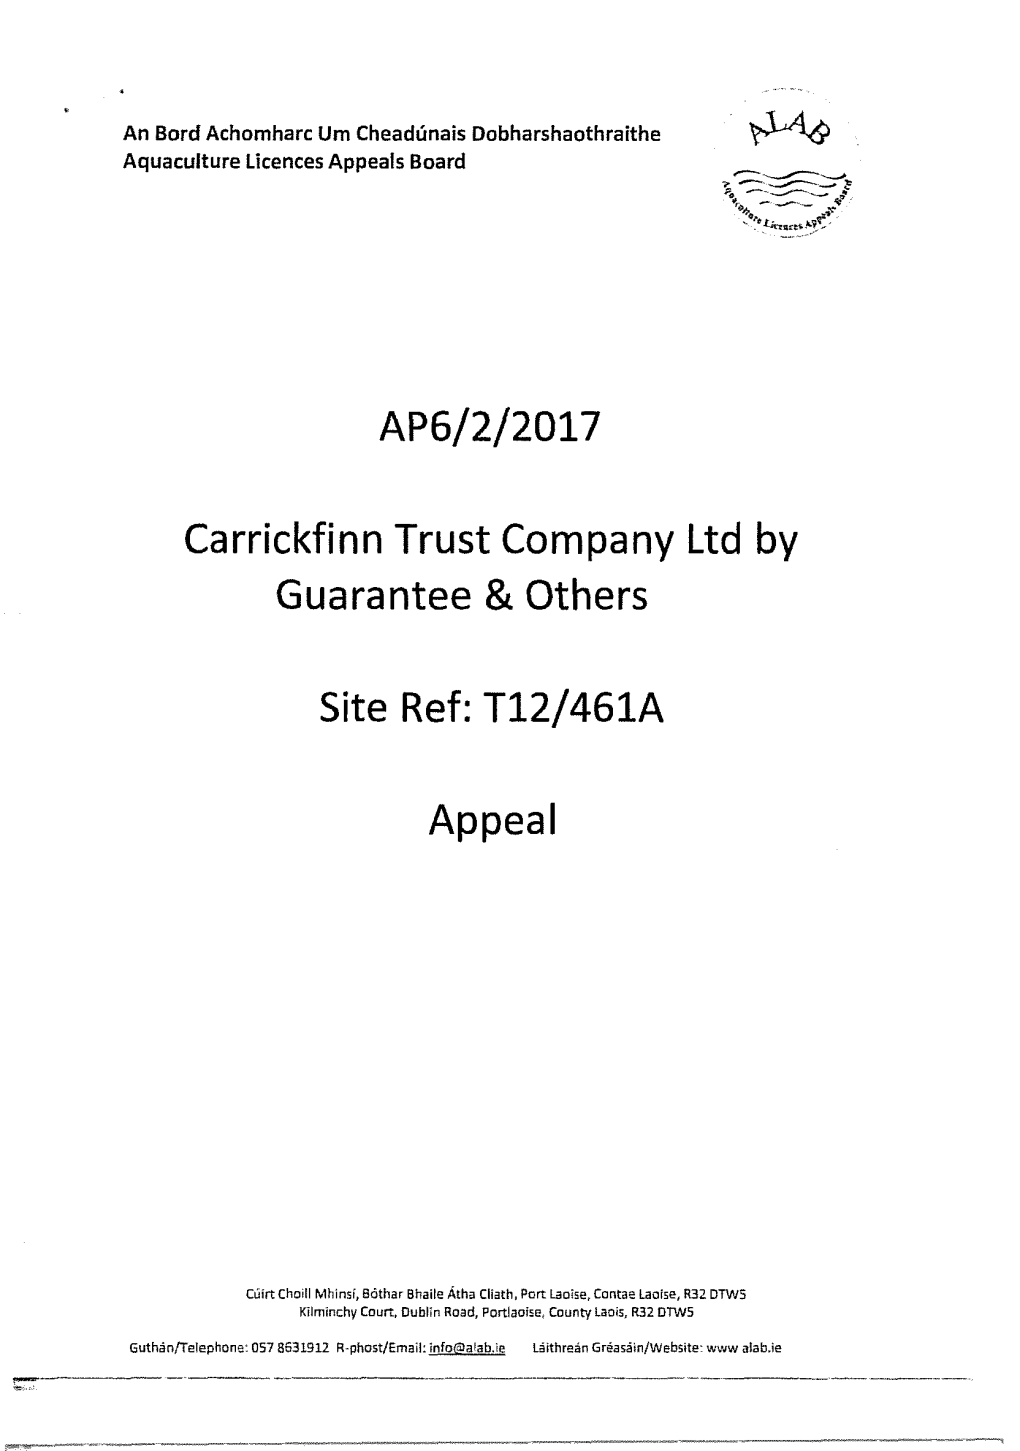 AP6/2/2017 Carrickfinn Trust Company Ltd by Guarantee